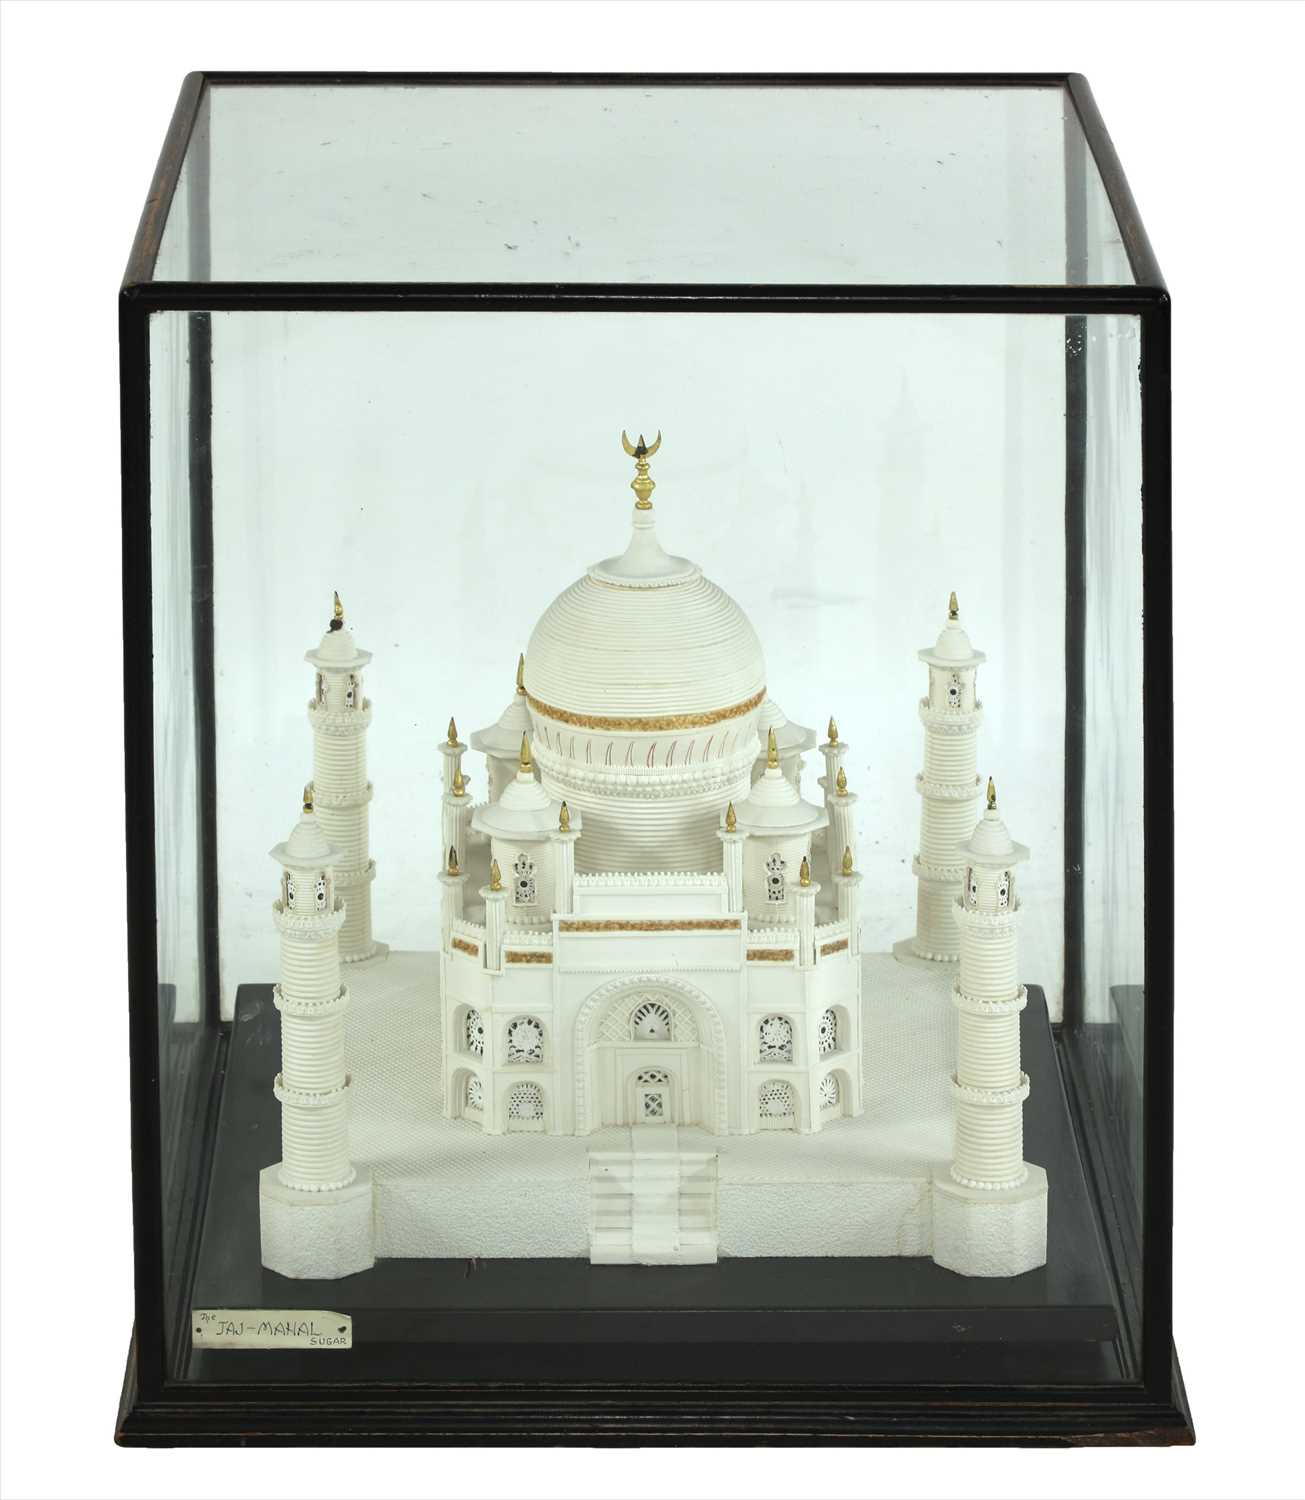 Taj Mahal India Souvenir Shot Glass and Shots Vintage Metal For Gift Item -  Helia Beer Co